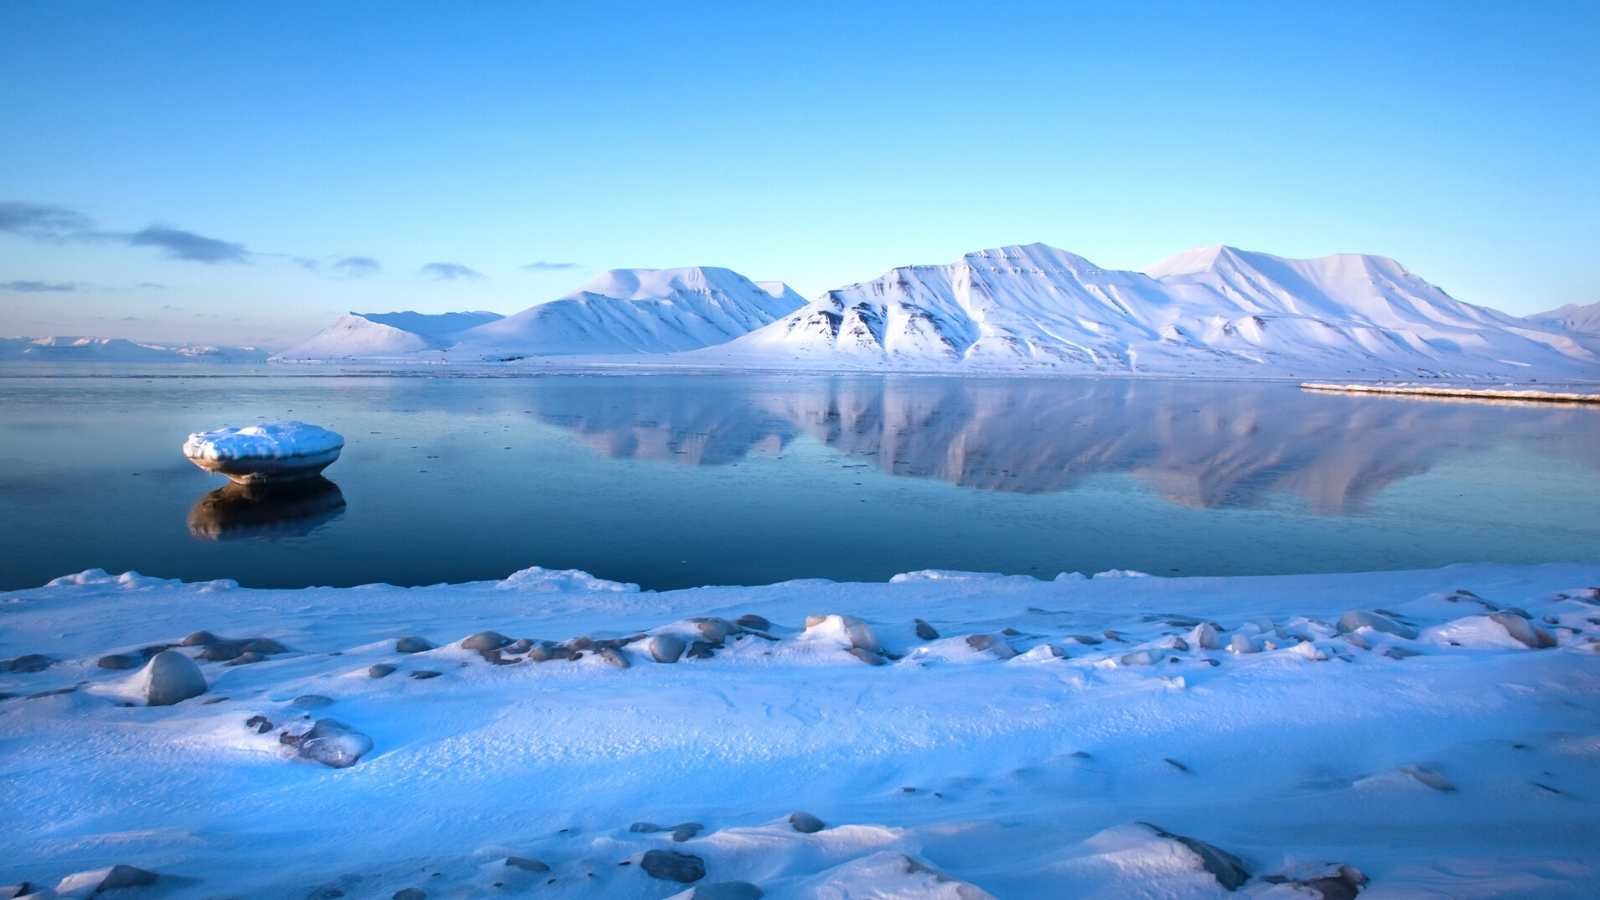 Arctic Landscape Photograph Join Ignacio Palacios and Ken Duncan on a Svalbard Photography Tour